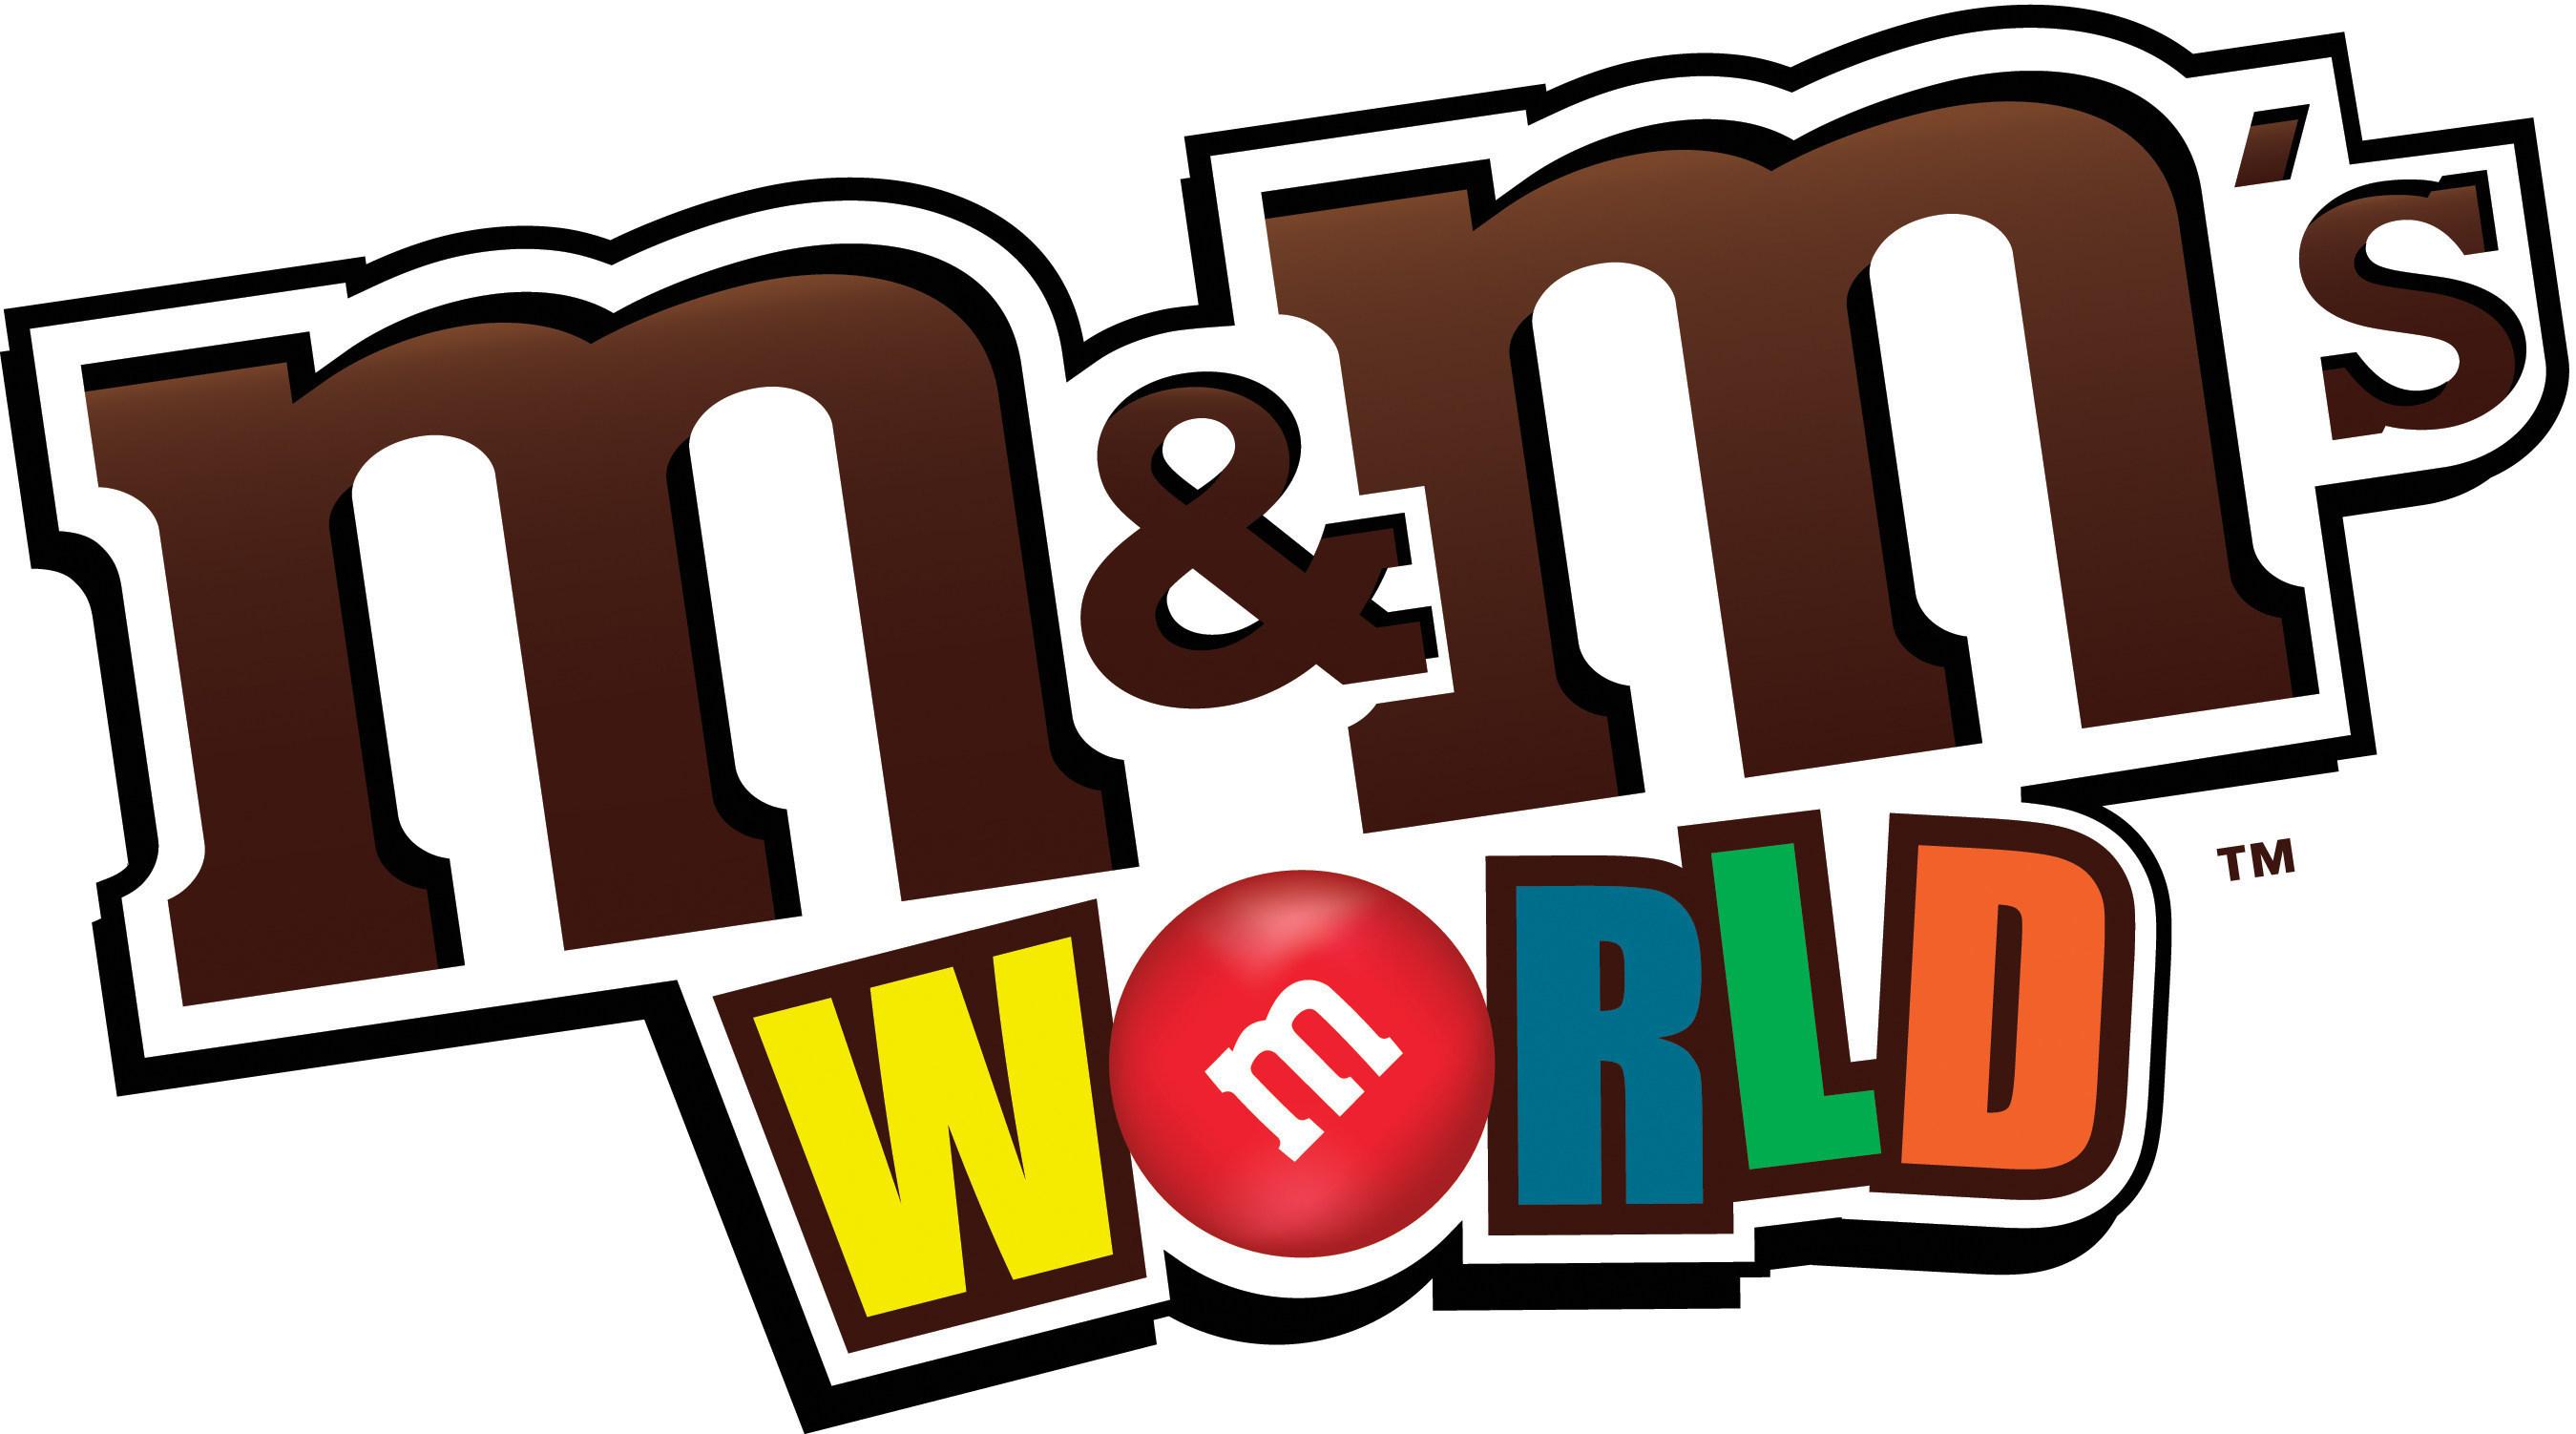 M&M Candy Logo - M&M's World - Heart of London Business Alliance